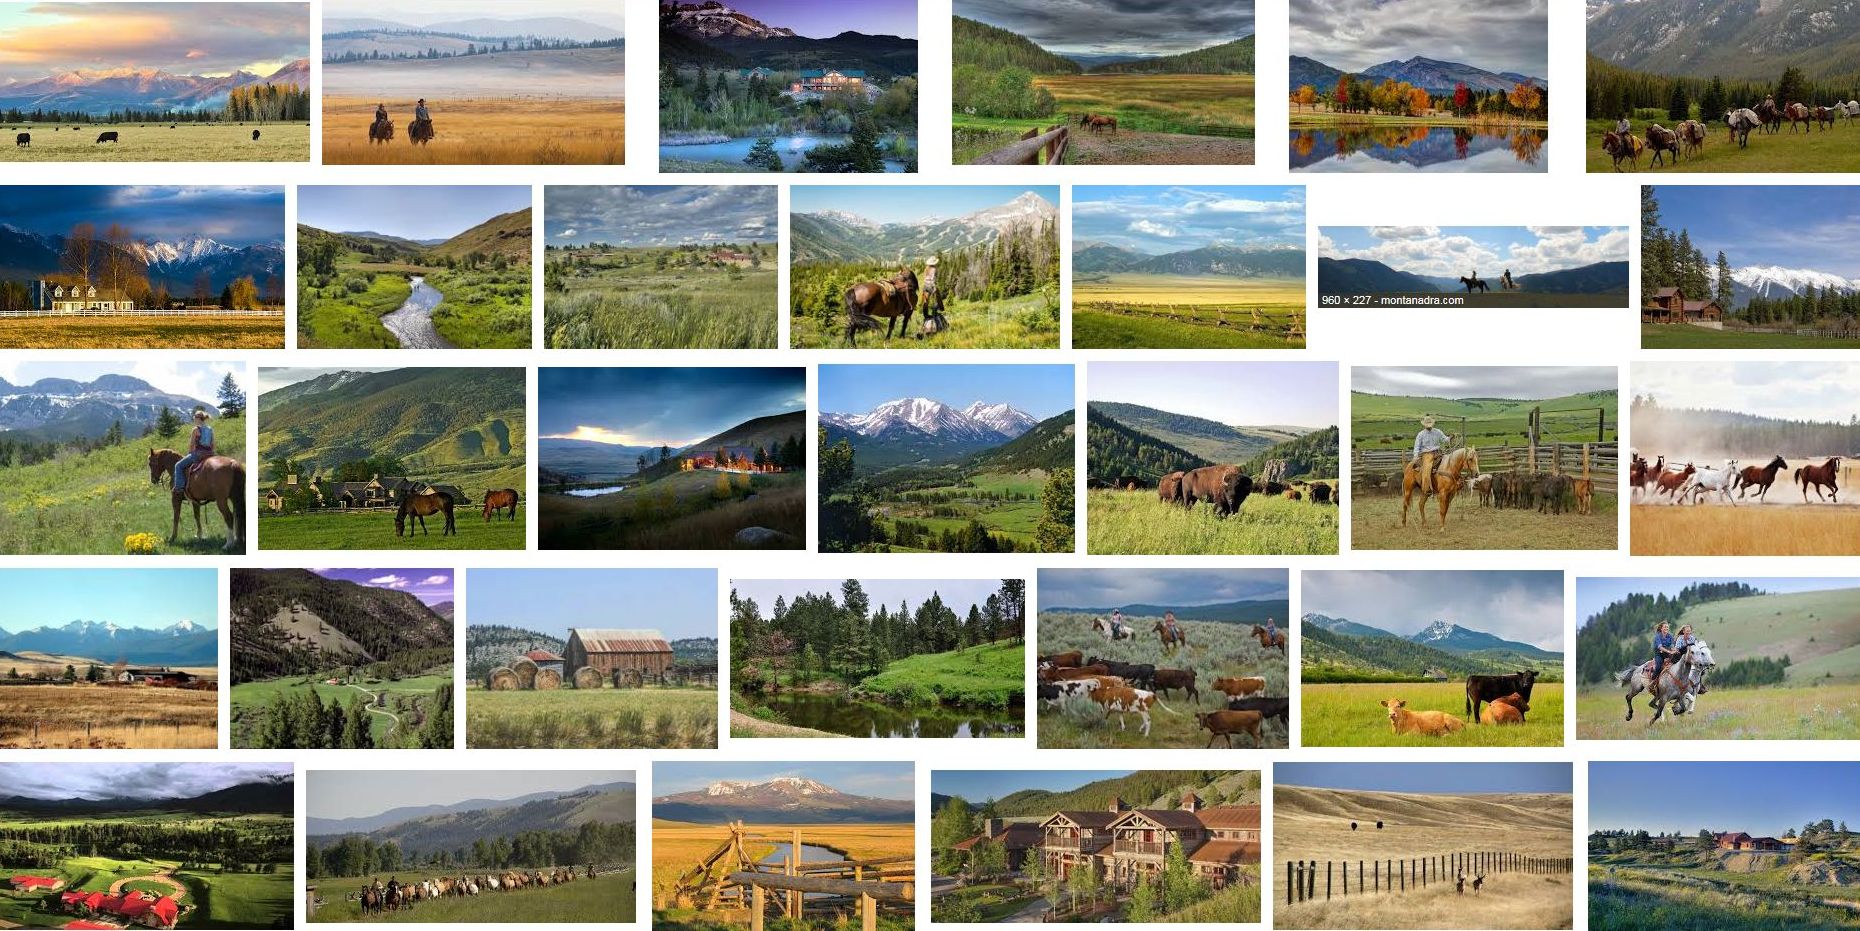 Montana Ranch Listings $500,000 To $600,000